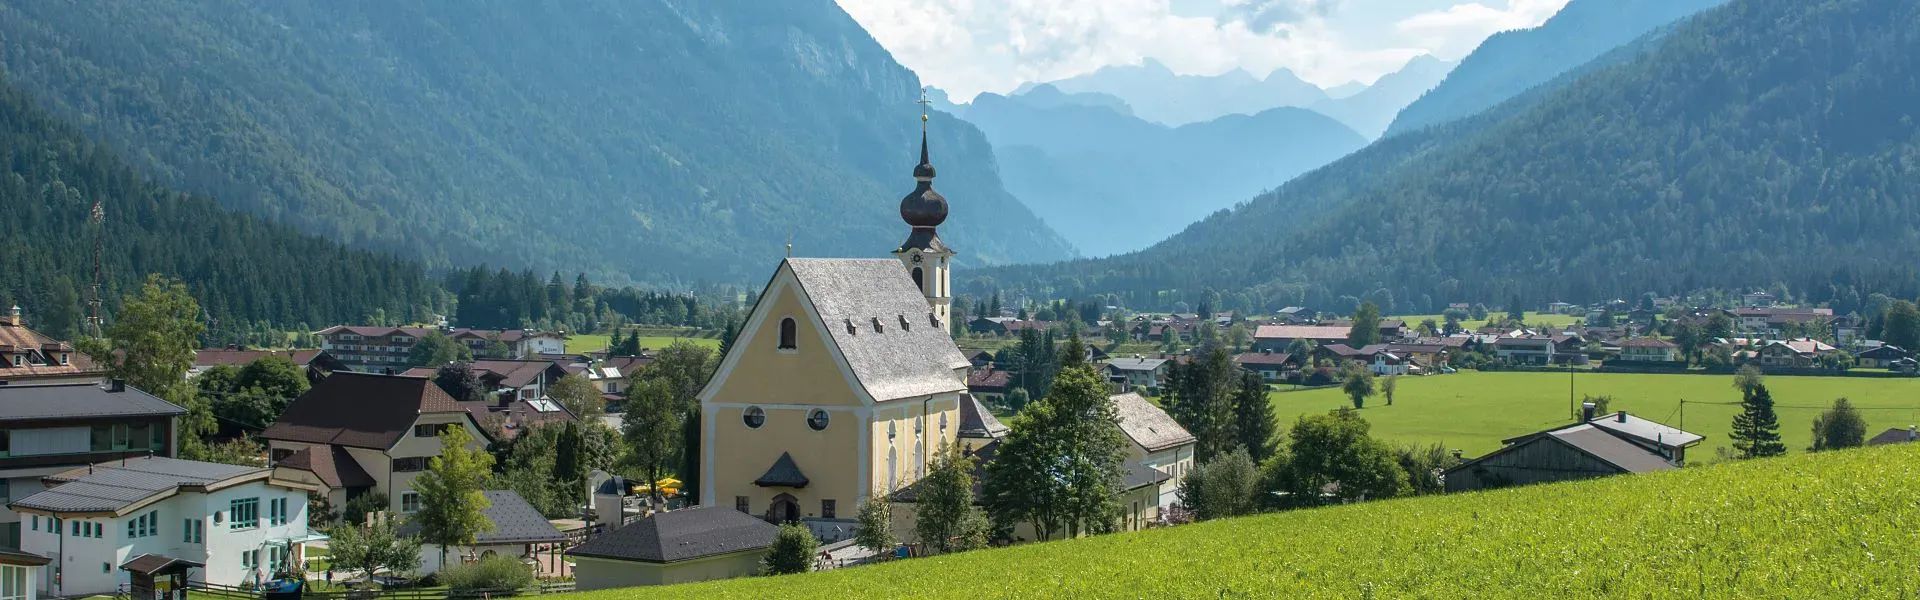 Gstehaus Luise - Waidring - in den Kitzbheler Alpen